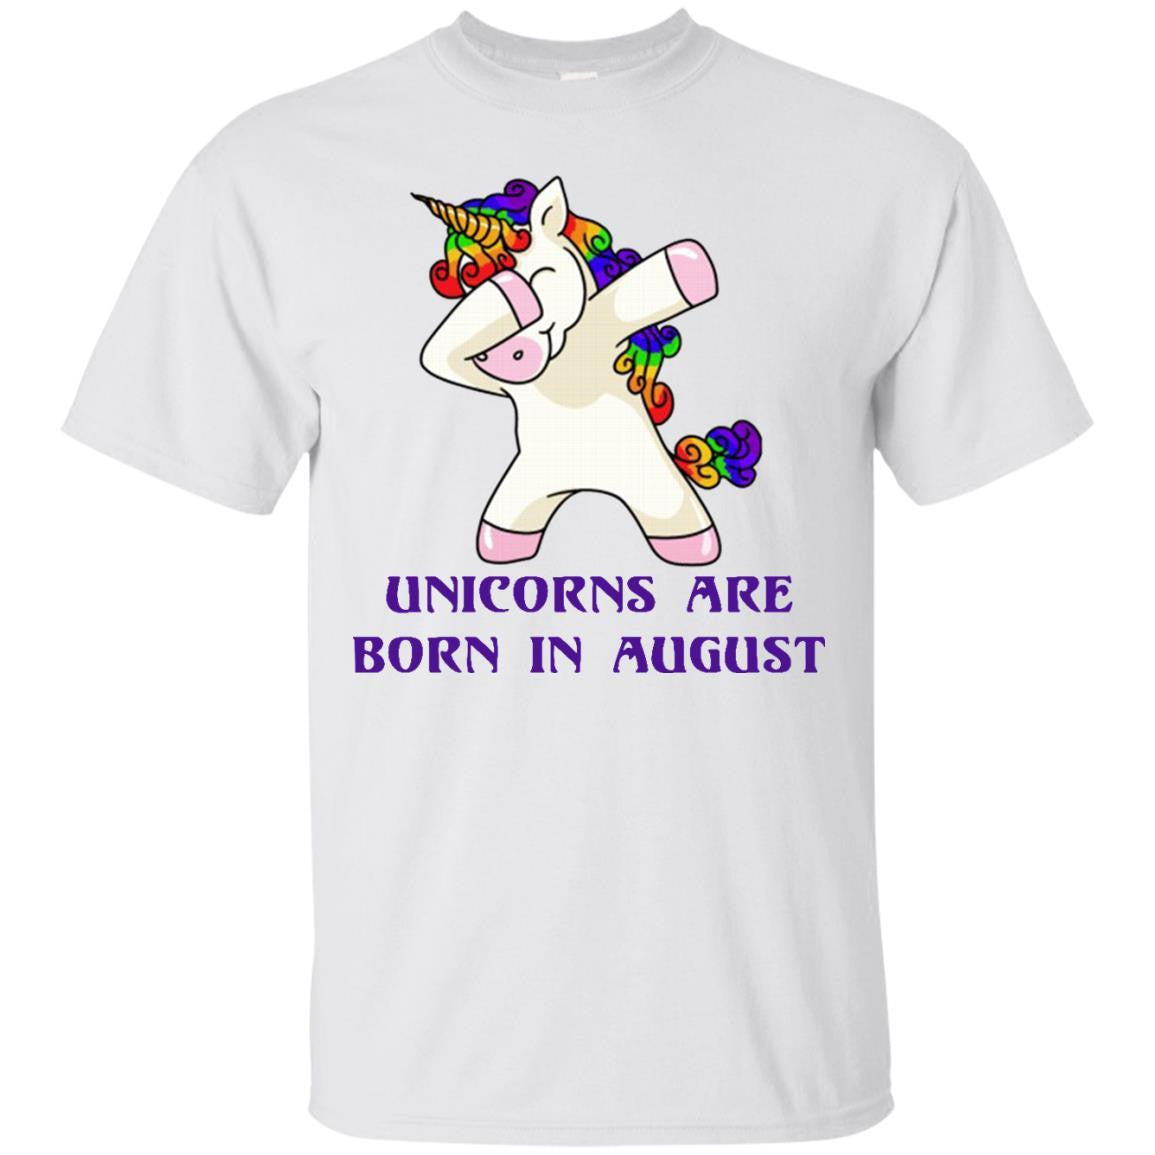 Dabbing Unicorns are born in August shirt, tank top, racerback